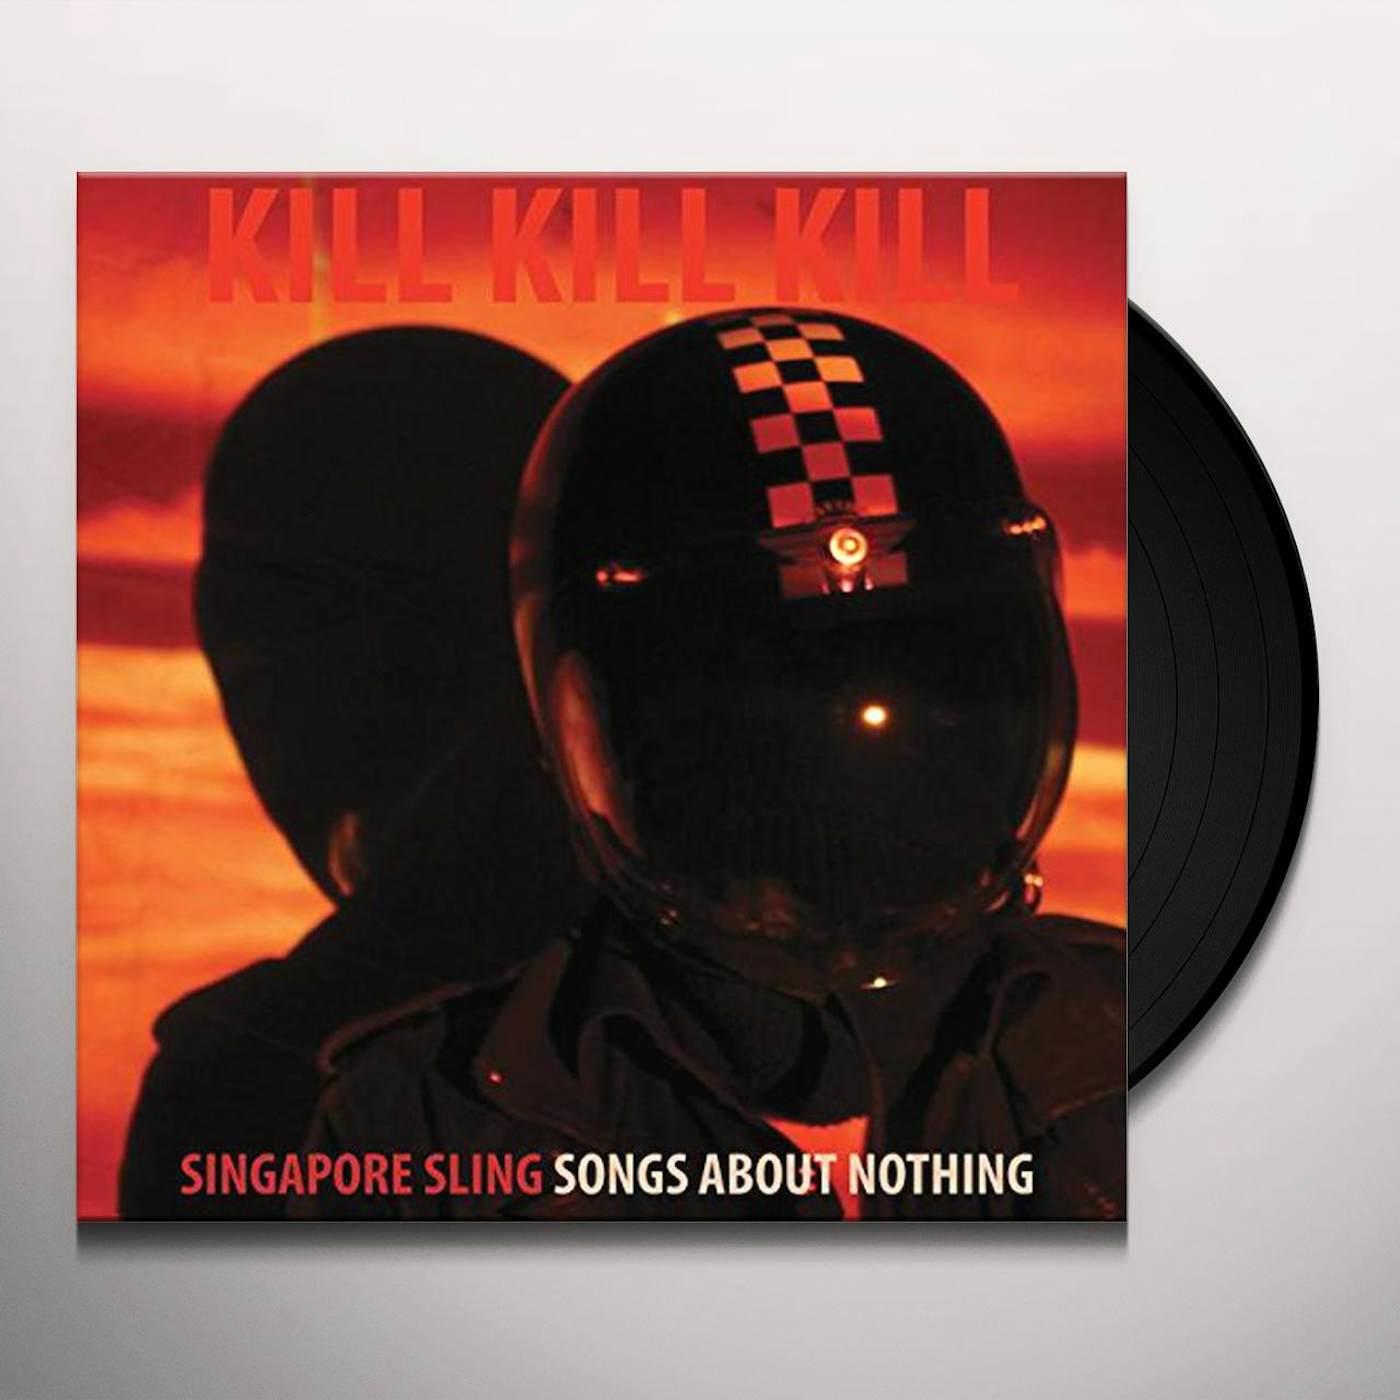 Singapore Sling Kill Kill Kill (Songs About Nothing) Vinyl Record